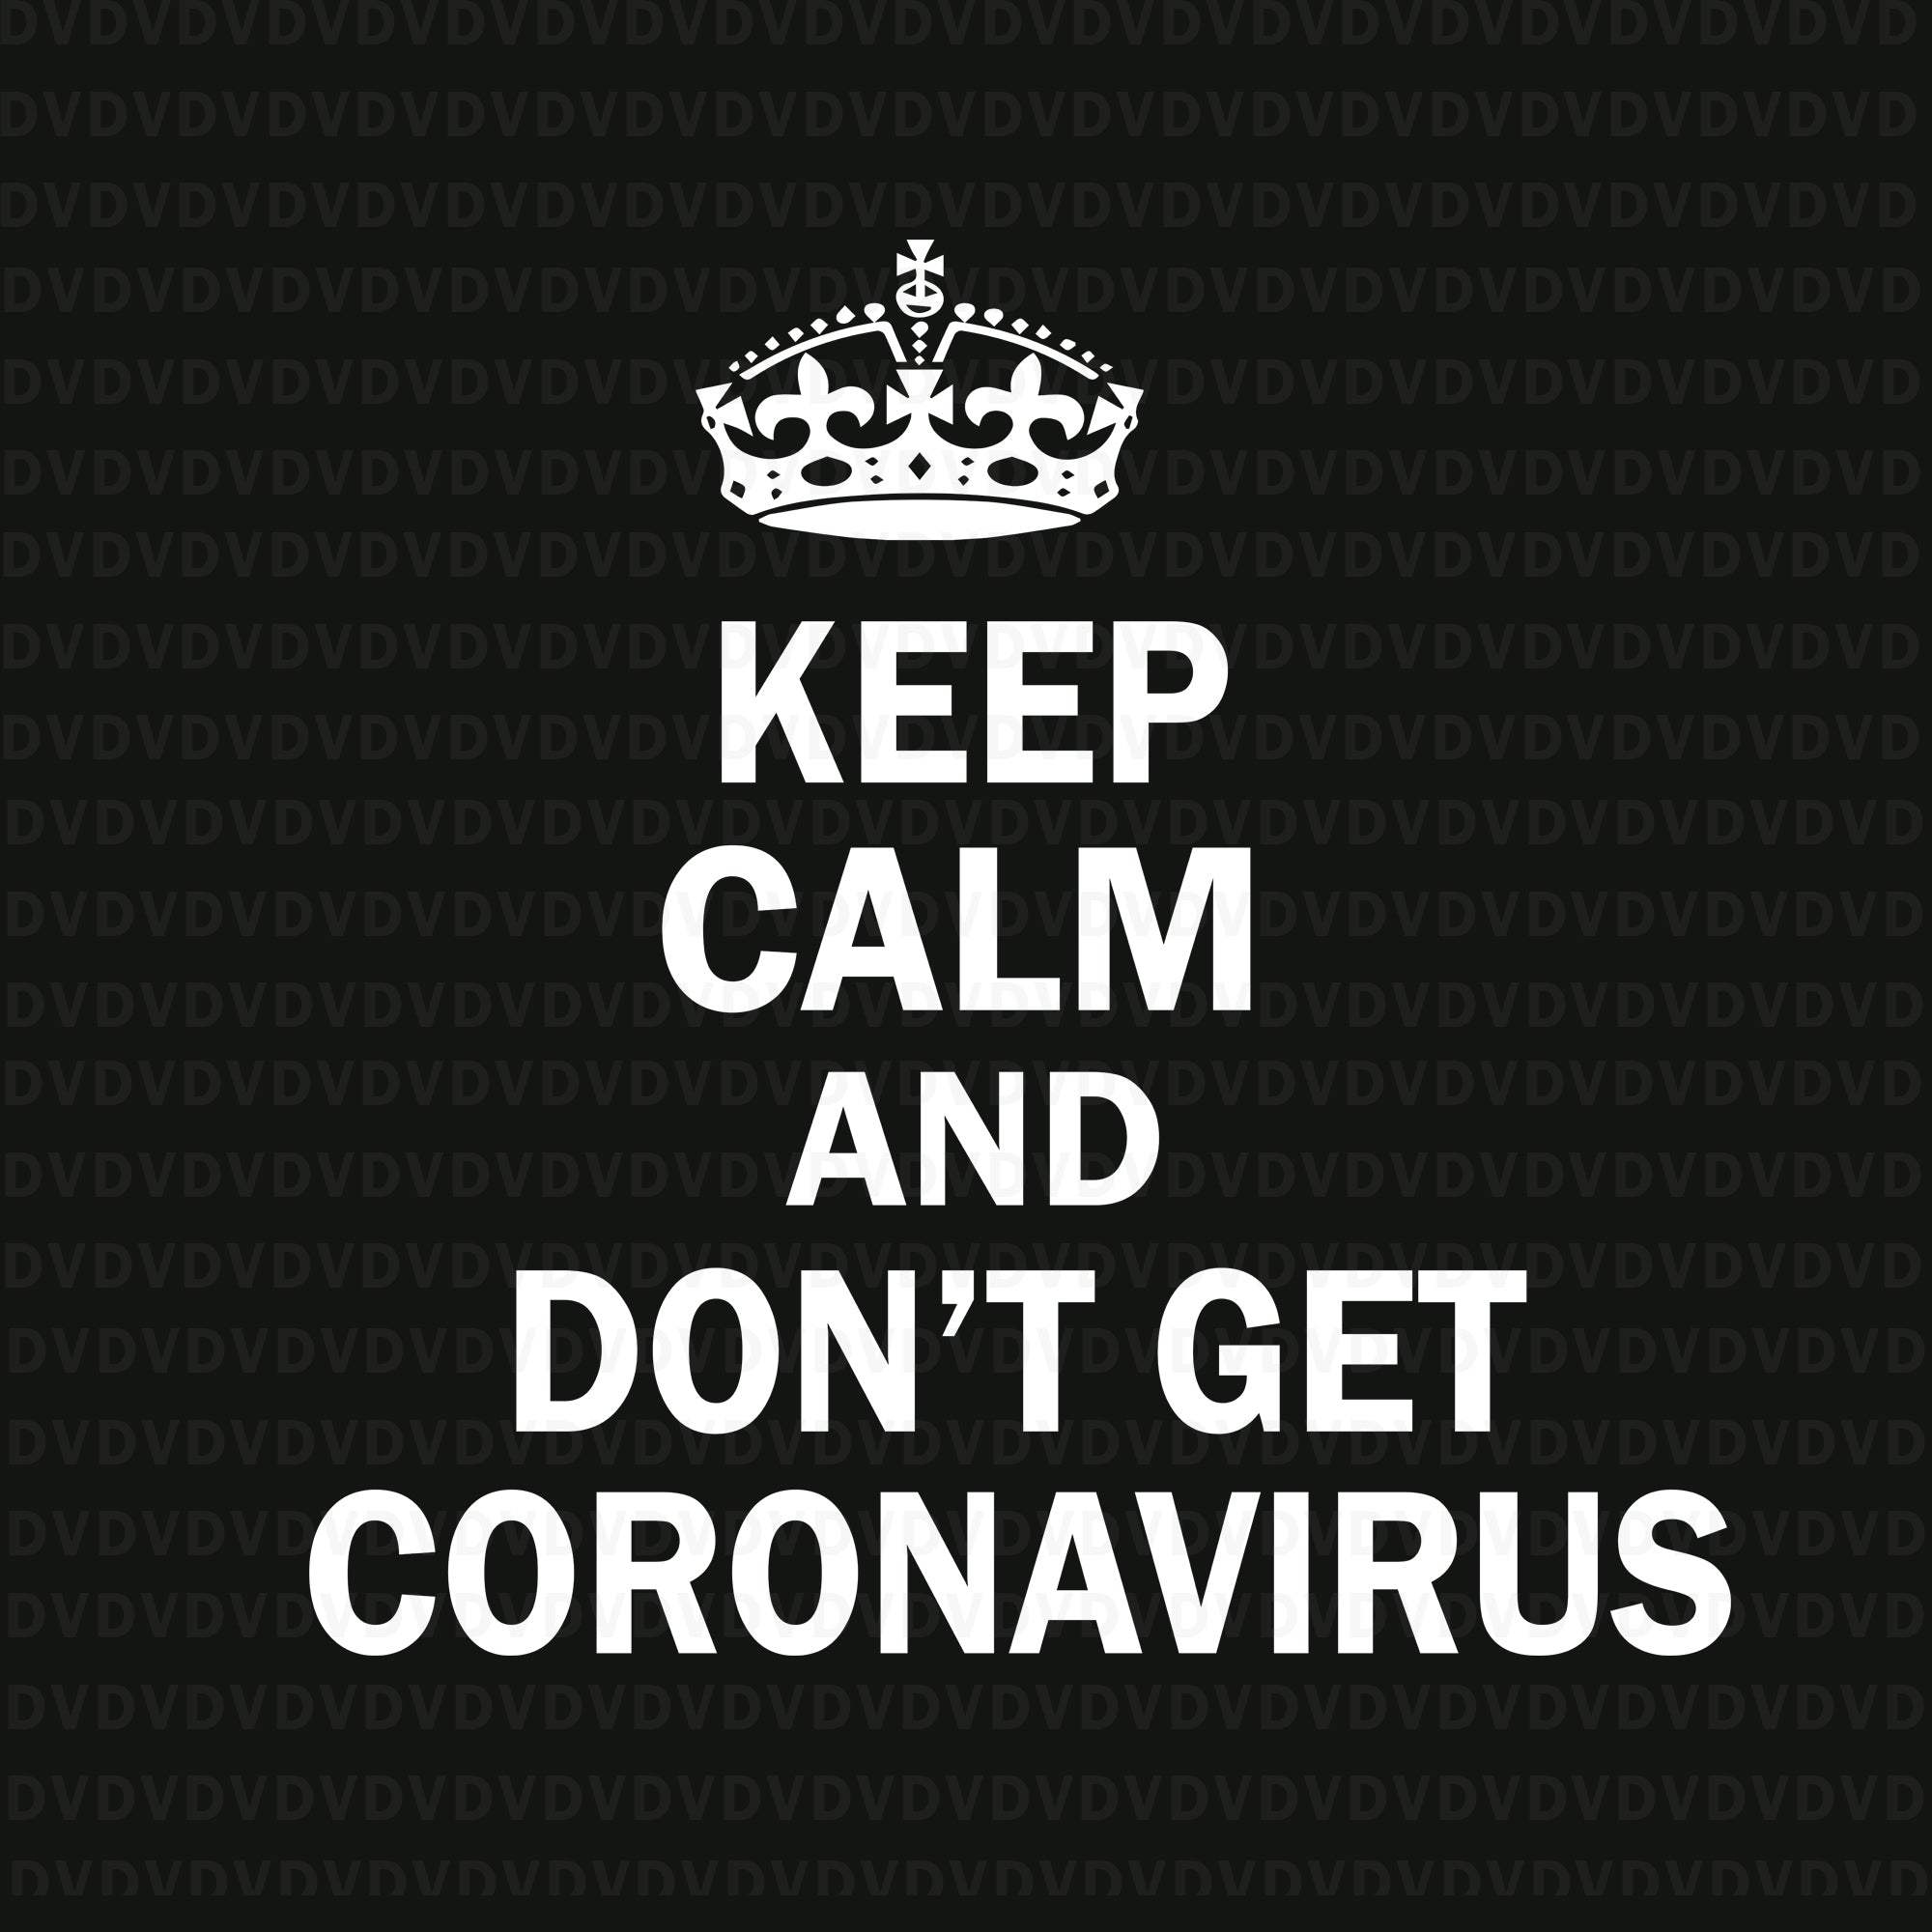 Keep calm and don’t get coronavirus svg, keep calm and don’t get coronavirus, keep calm and don’t get coronavirus